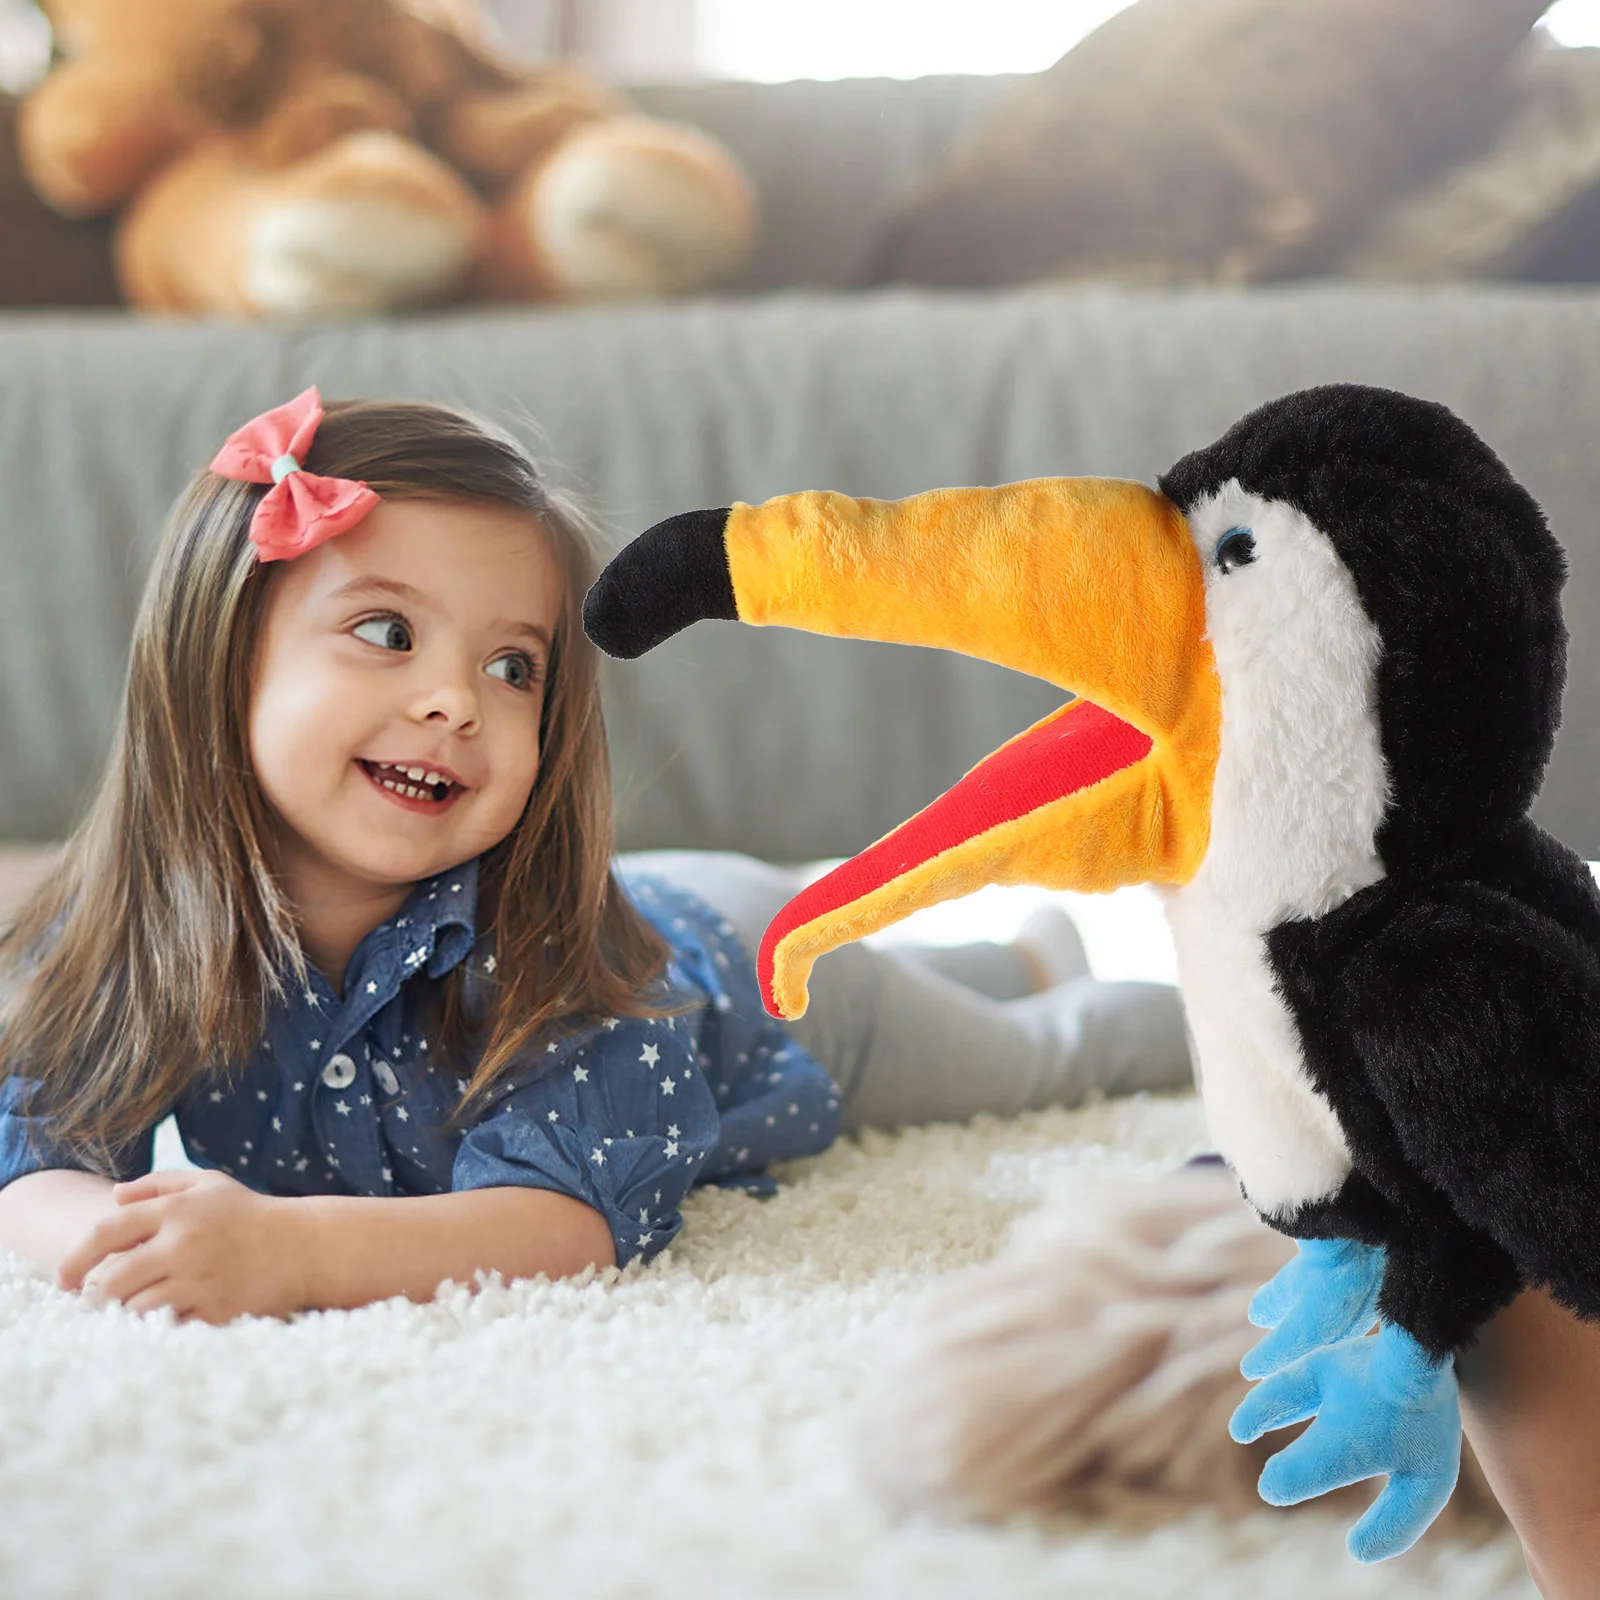 

Bird Puppet Plush Hand Cartoon Story Telling Interactive Toy Emulated Puppets Kids